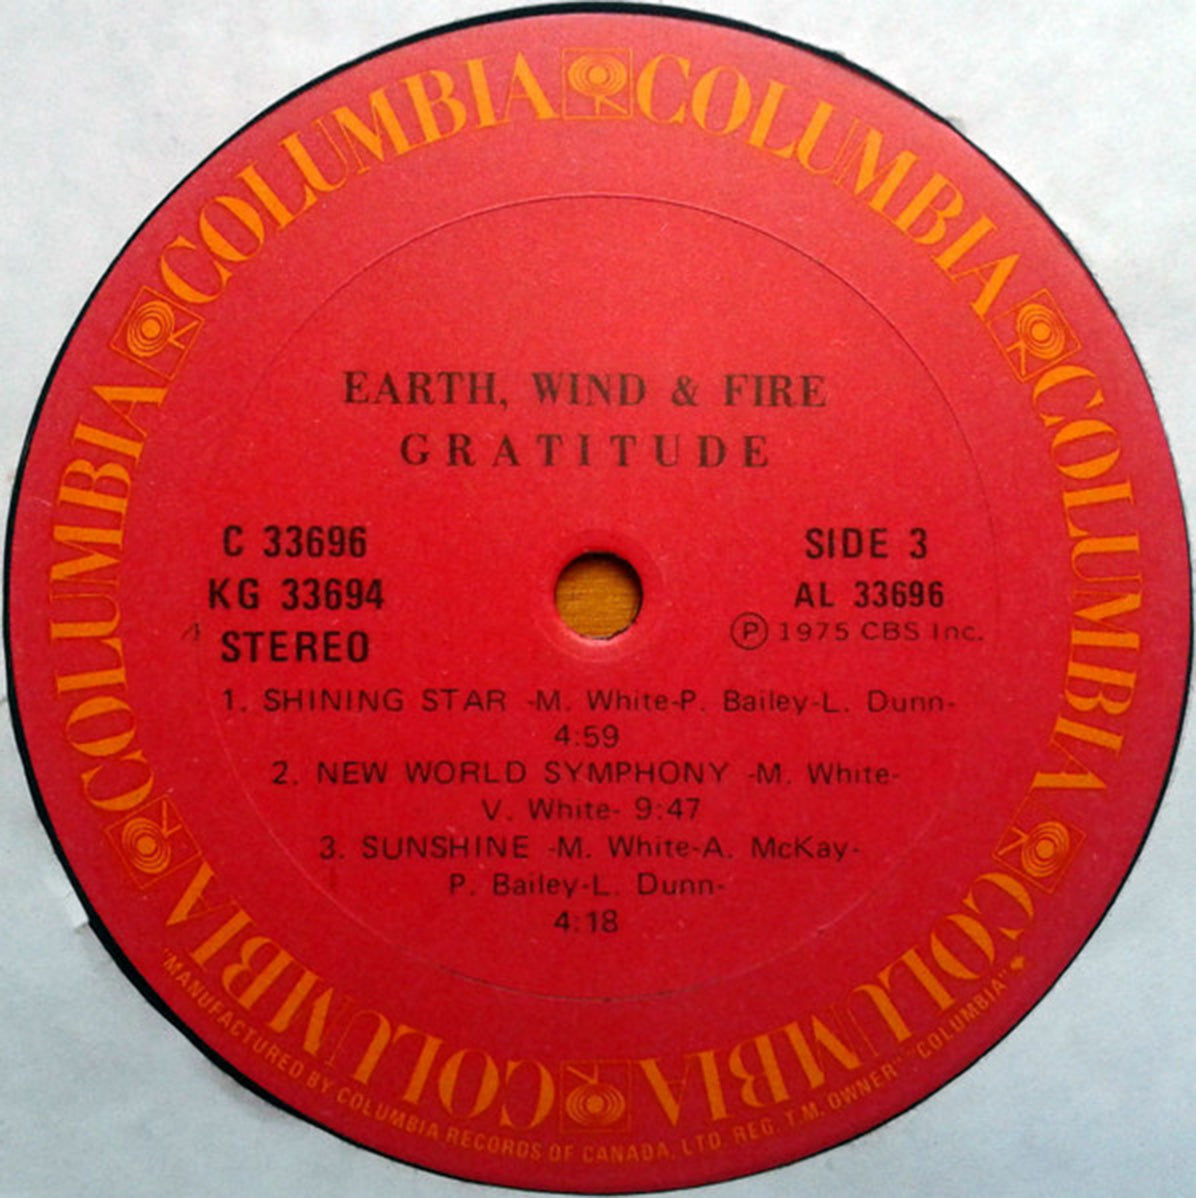 Earth, Wind & Fire – Gratitude - 1975